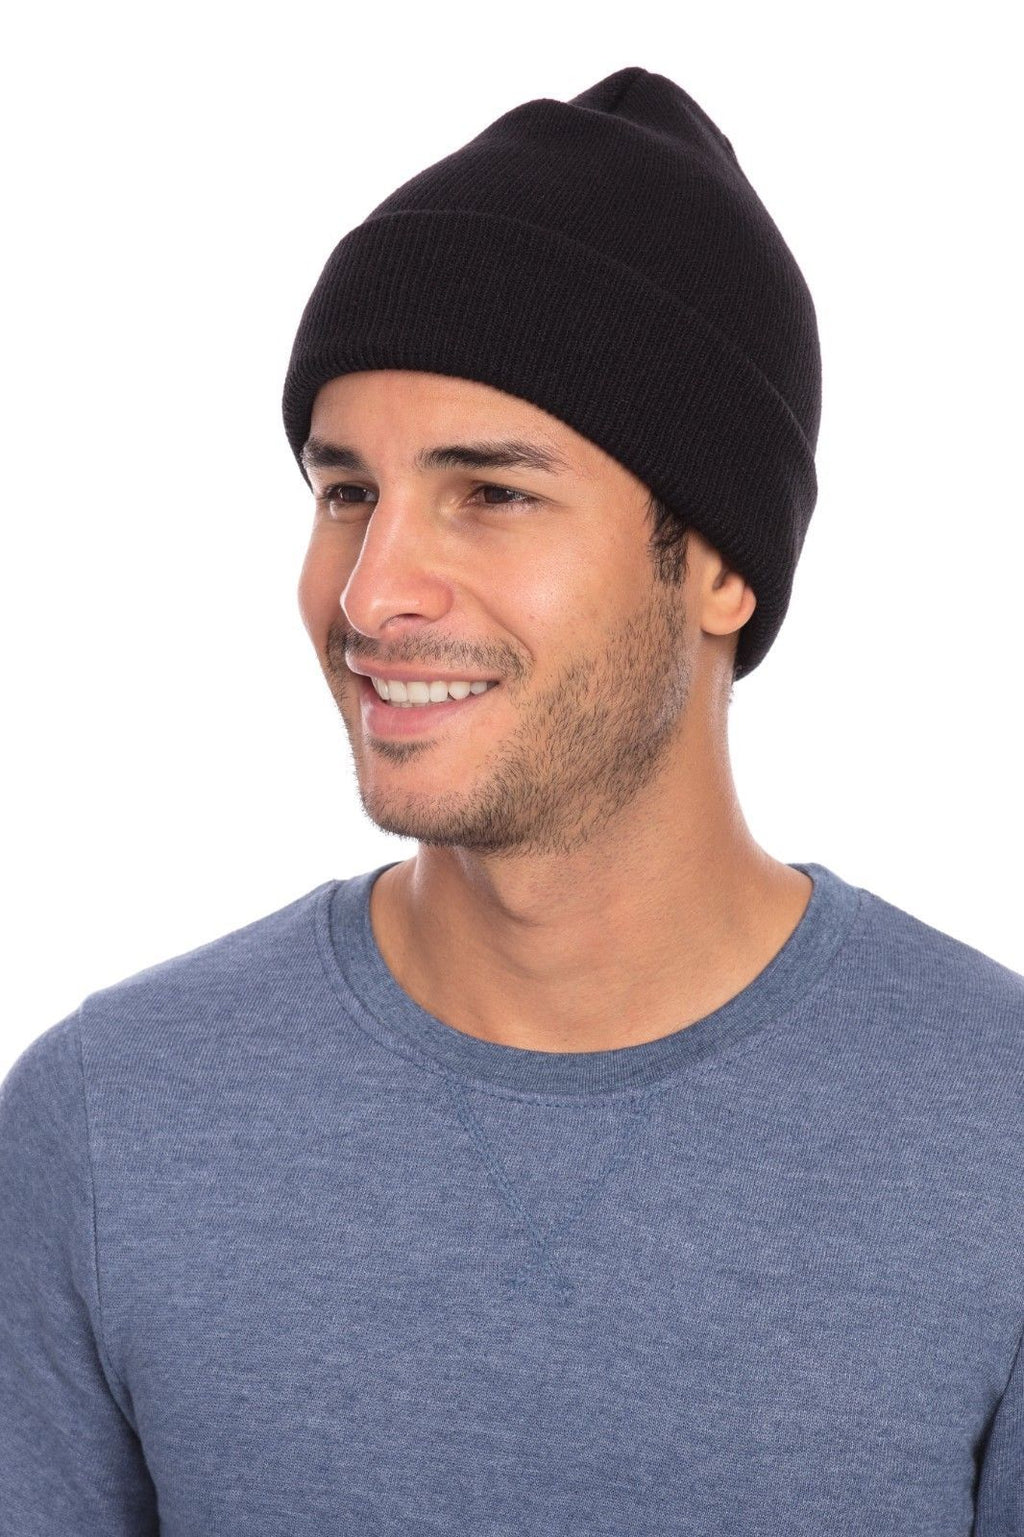 Casaba Warm Winter Beanies Hat Cap for Men Women Toboggan Cuffed Knit